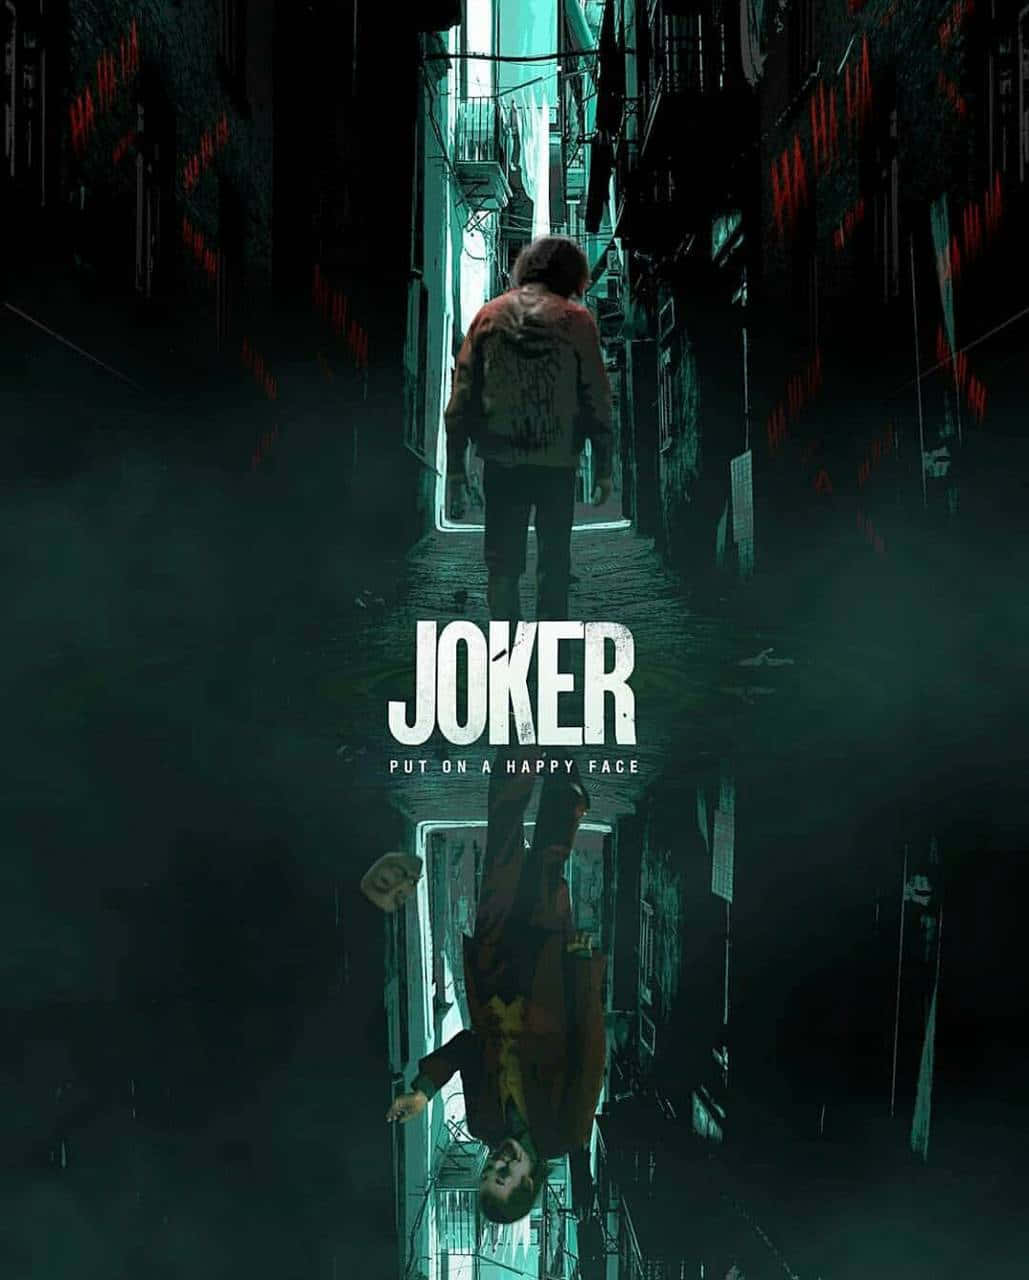 Astounding Joker Poster Upside Down Reflection Graphic Art Wallpaper